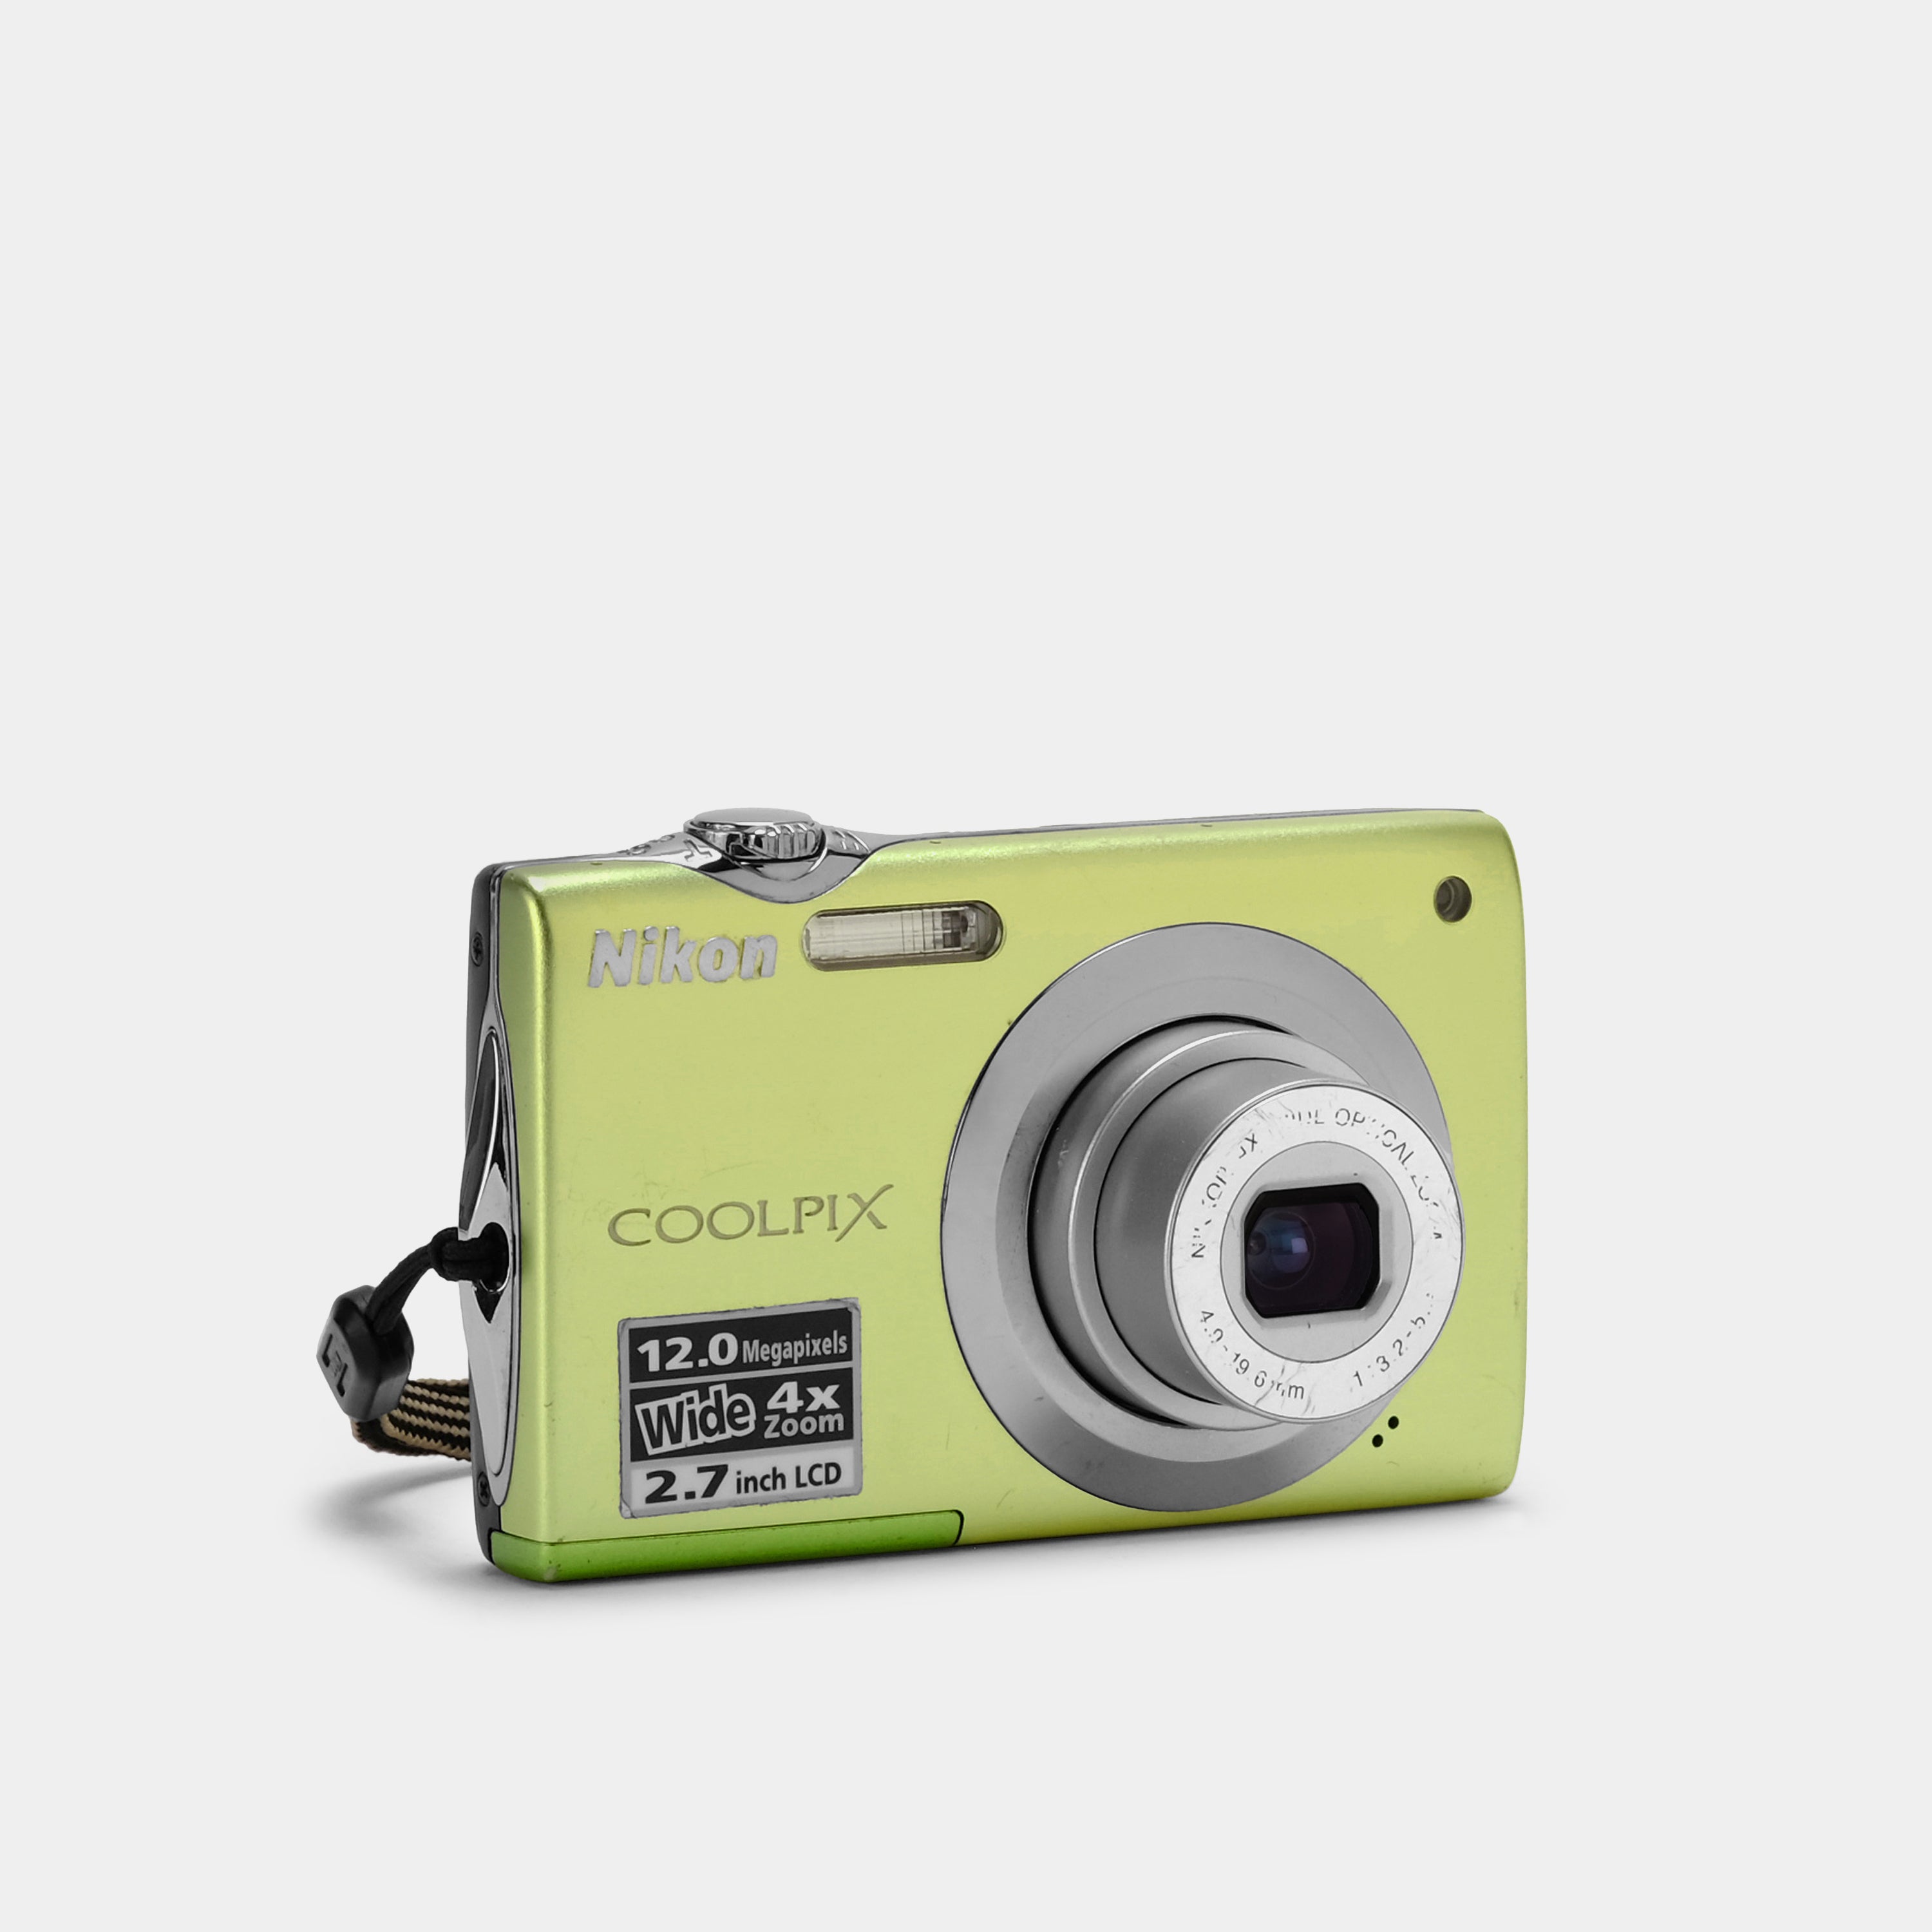 Nikon Coolpix S3000 Green Point and Shoot Digital Camera